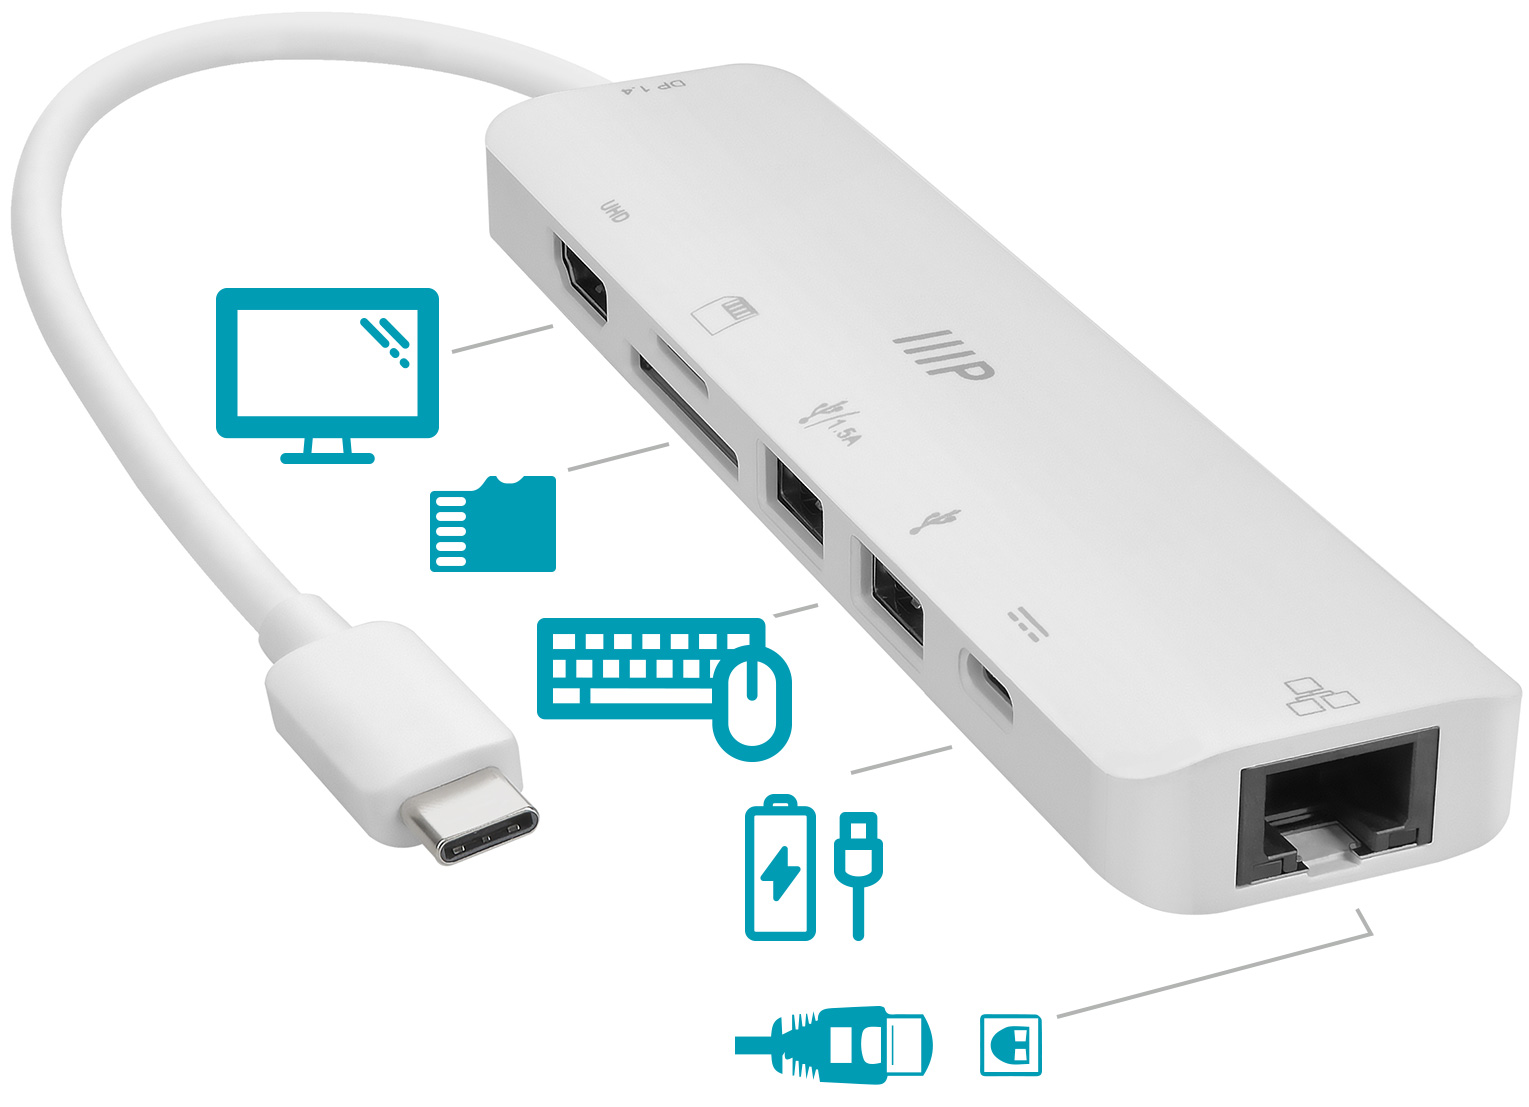 Monoprice USB-C to Dual 4K DisplayPort Adapter (Dual 4K@60Hz) 